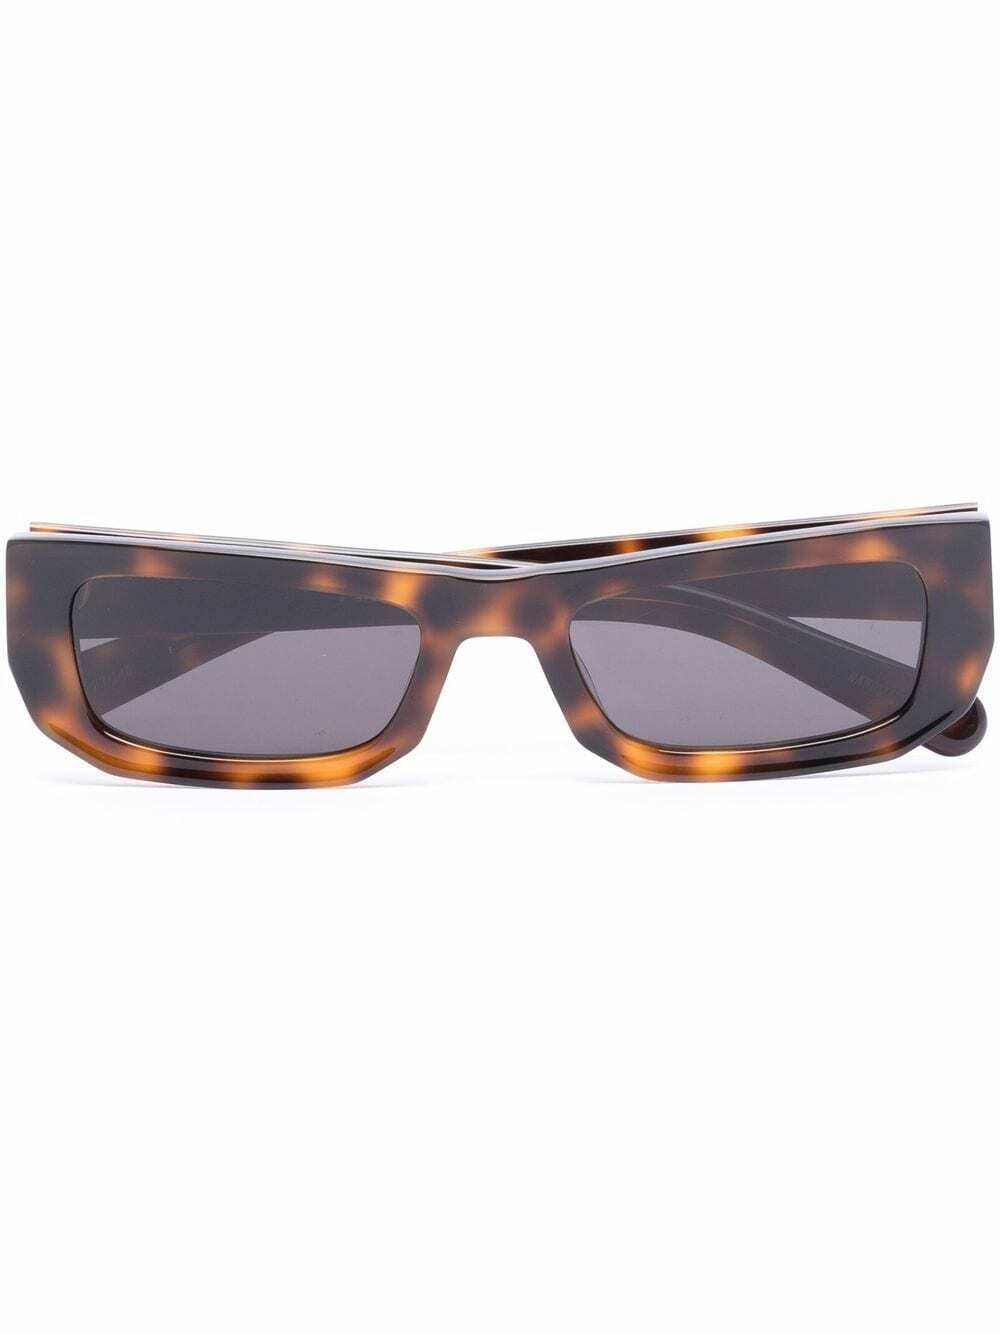 Photo: FLATLIST - Bricktop Sunglasses